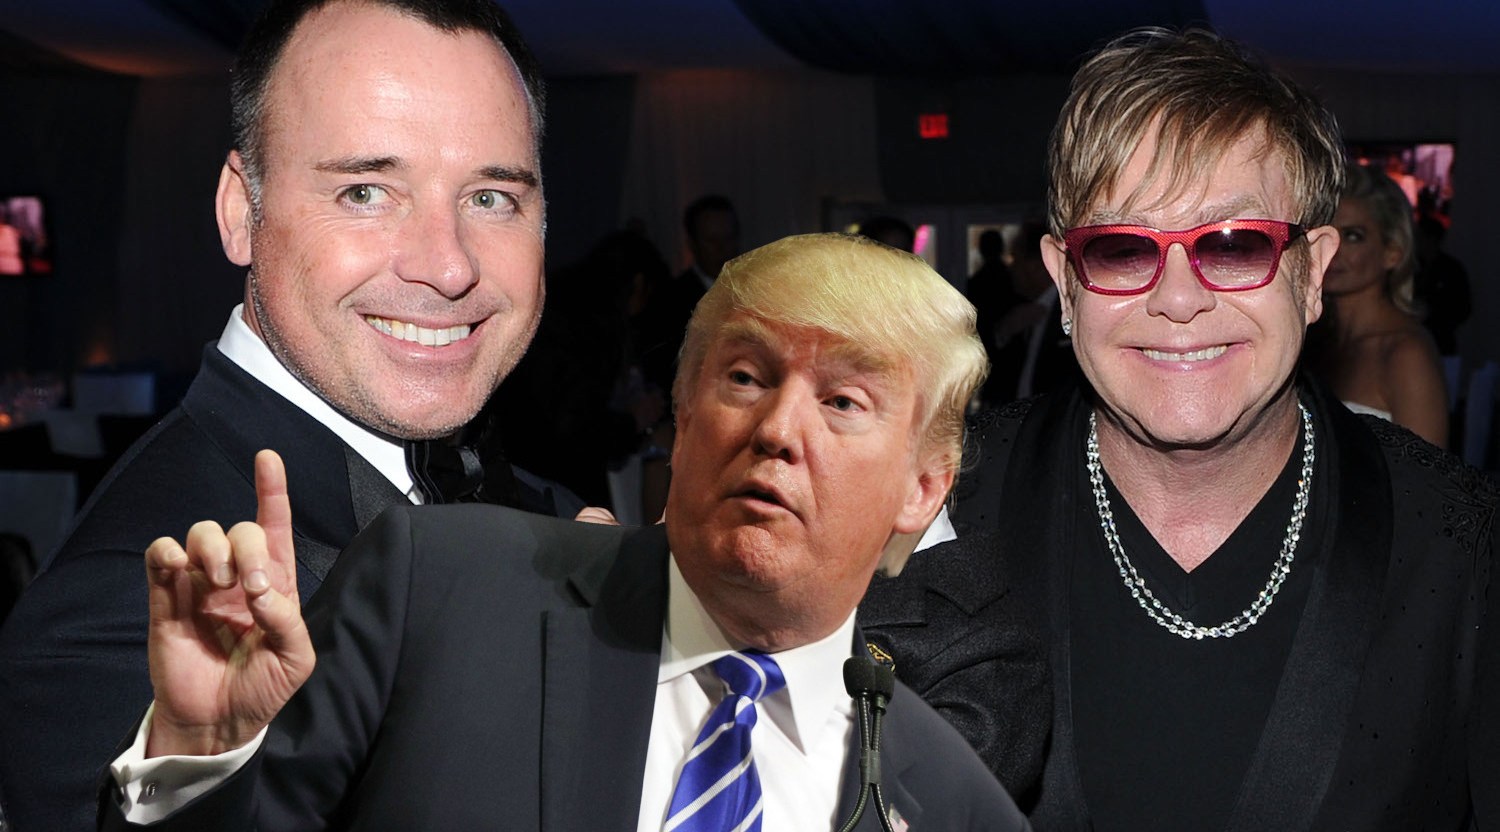 Donald Trump celebrated Elton John's marriage in 2005 | PinkNews